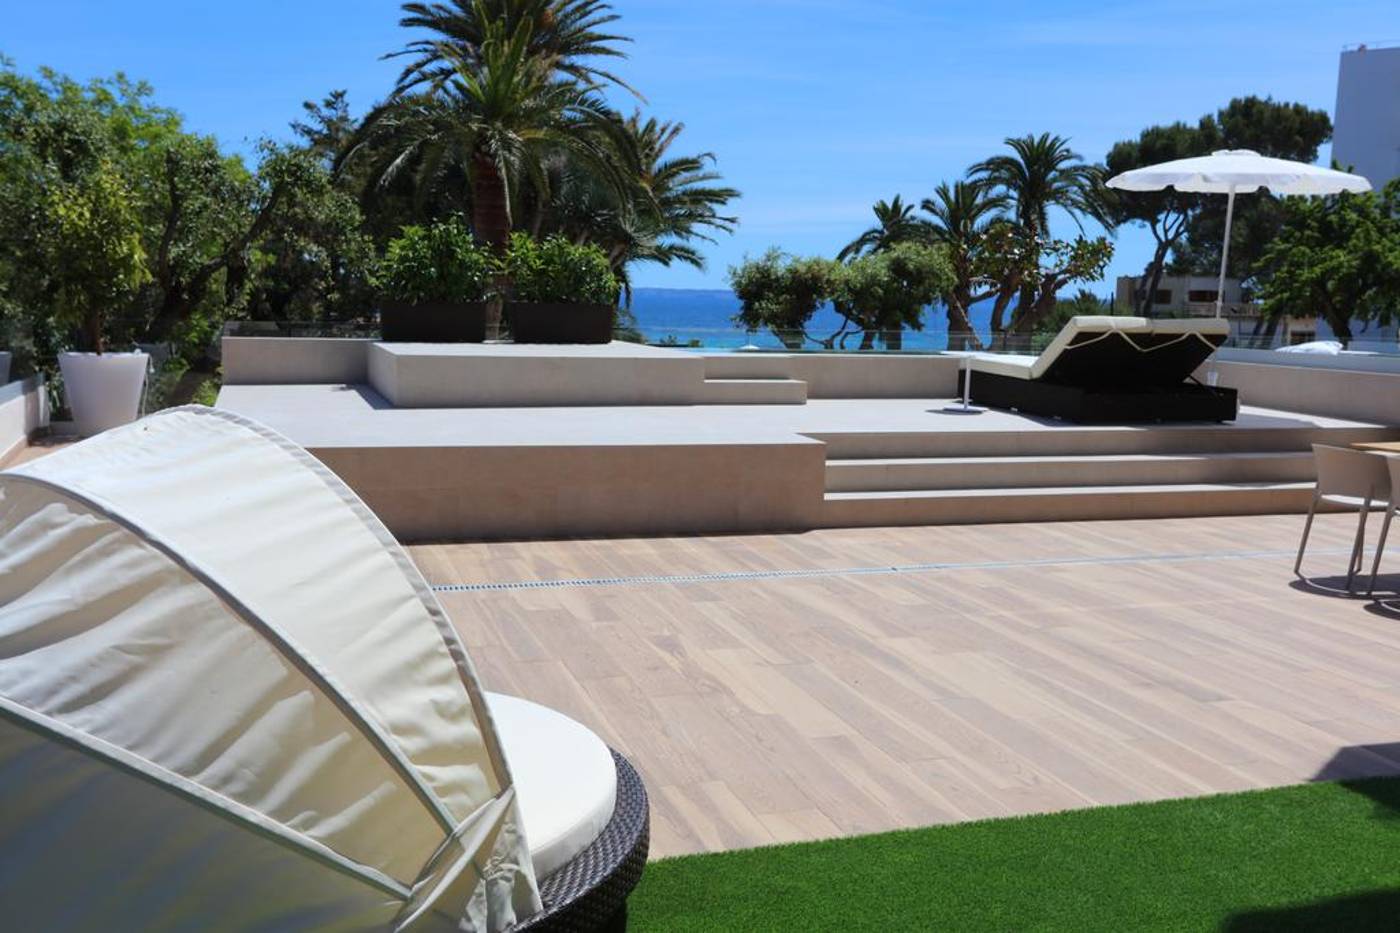 Son Caliu Hotel Spa Oasis in Balearics, Majorca, Spain